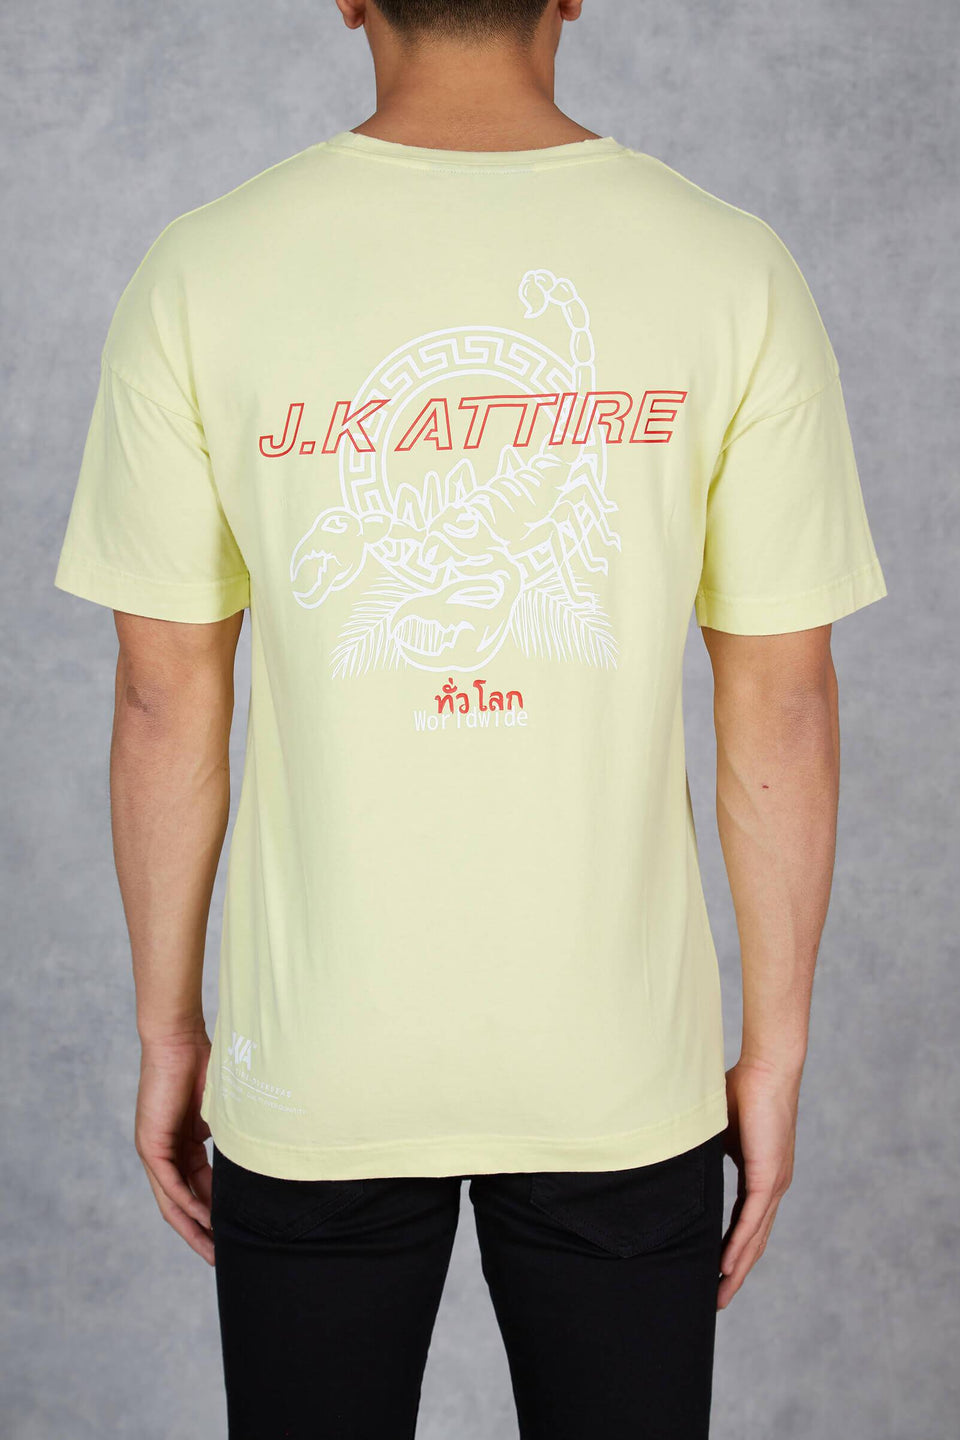 Scorpion Acid Wash T-Shirt - Neon Yellow